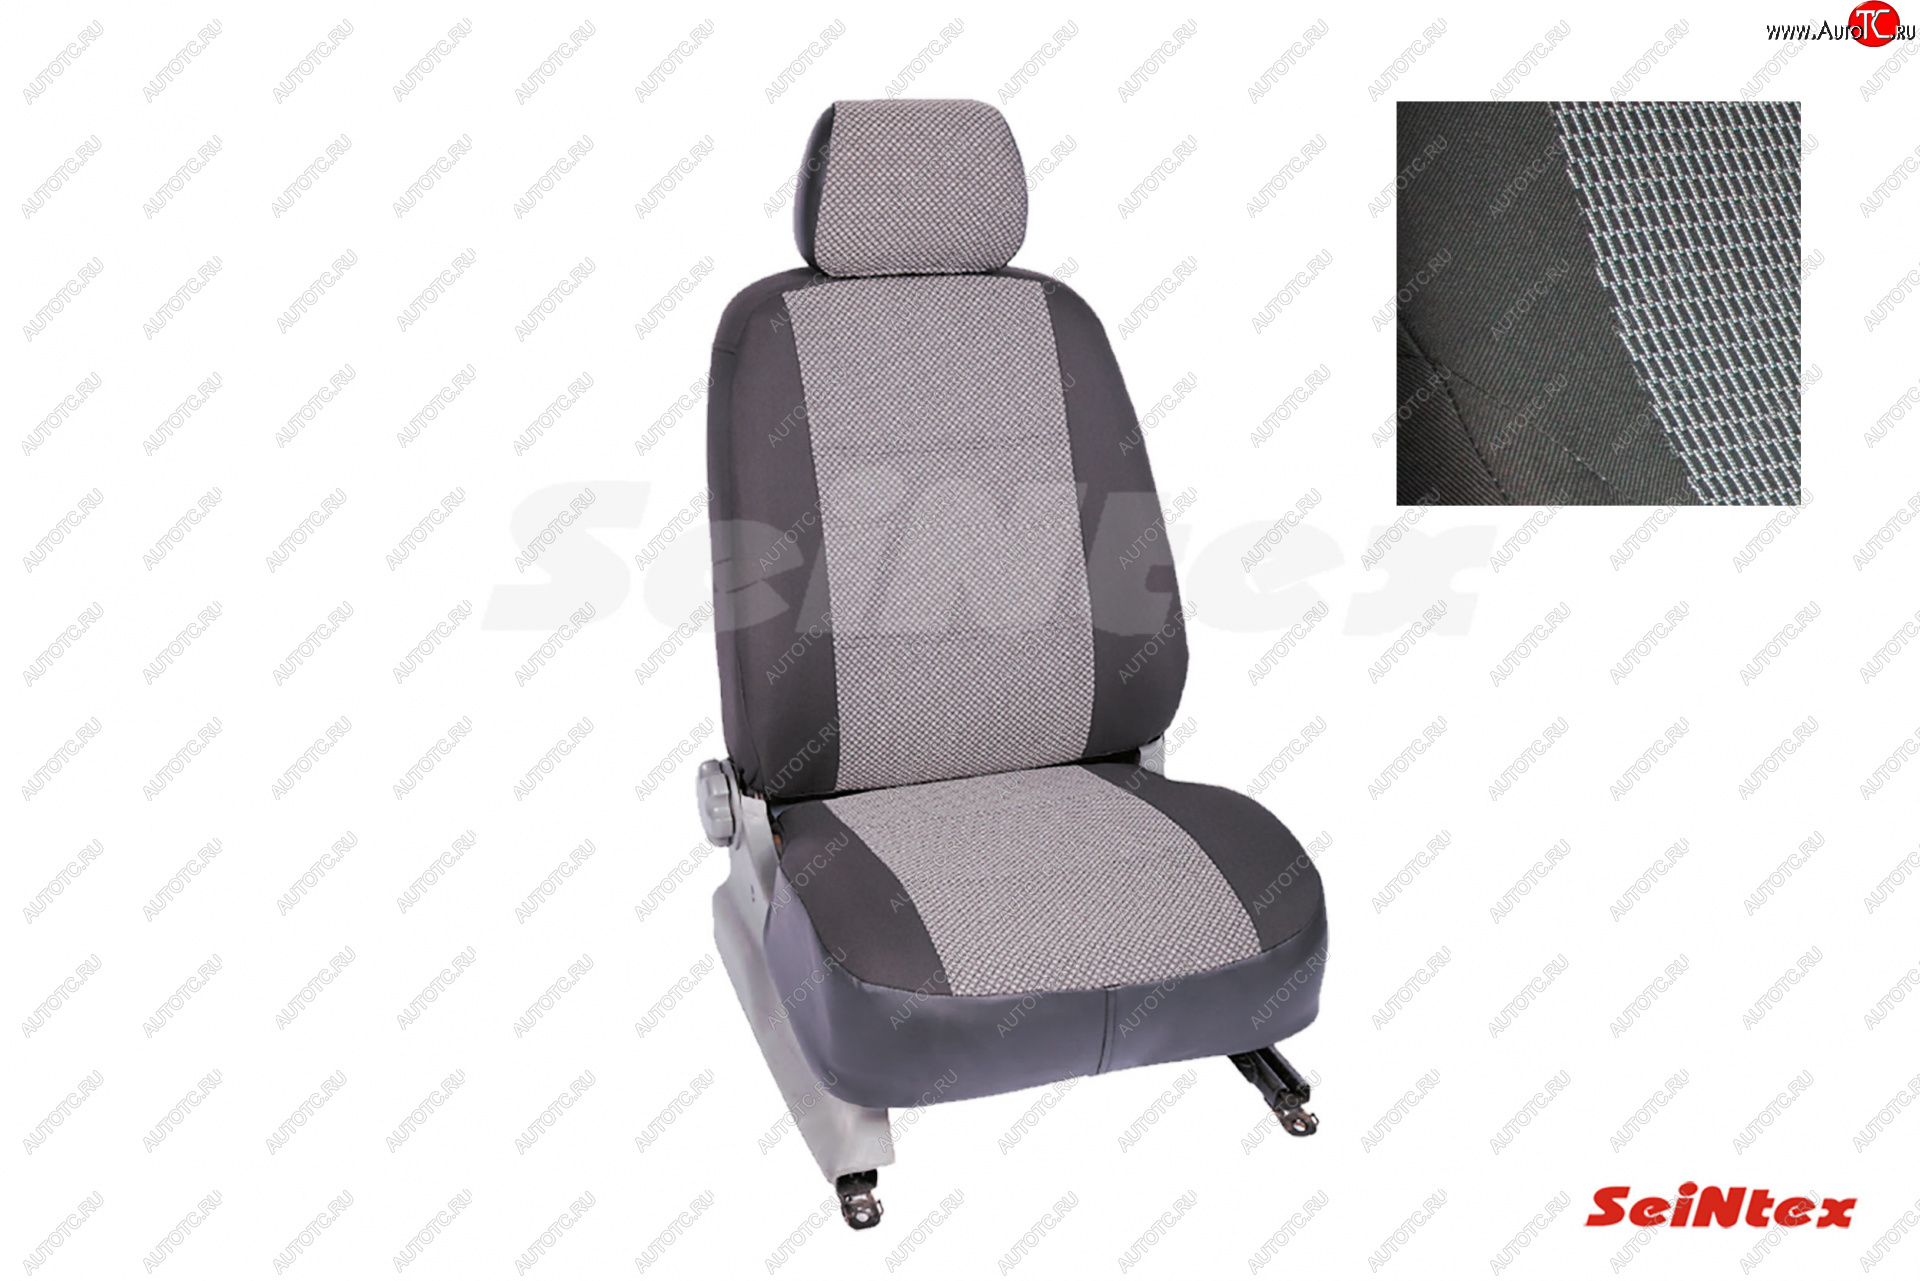 4 599 р. Чехлы для сидений на Seintex (жаккард) 50/50  Suzuki Grand Vitara  3TD62, TL52 5 дверей (1997-2005)  с доставкой в г. Калуга